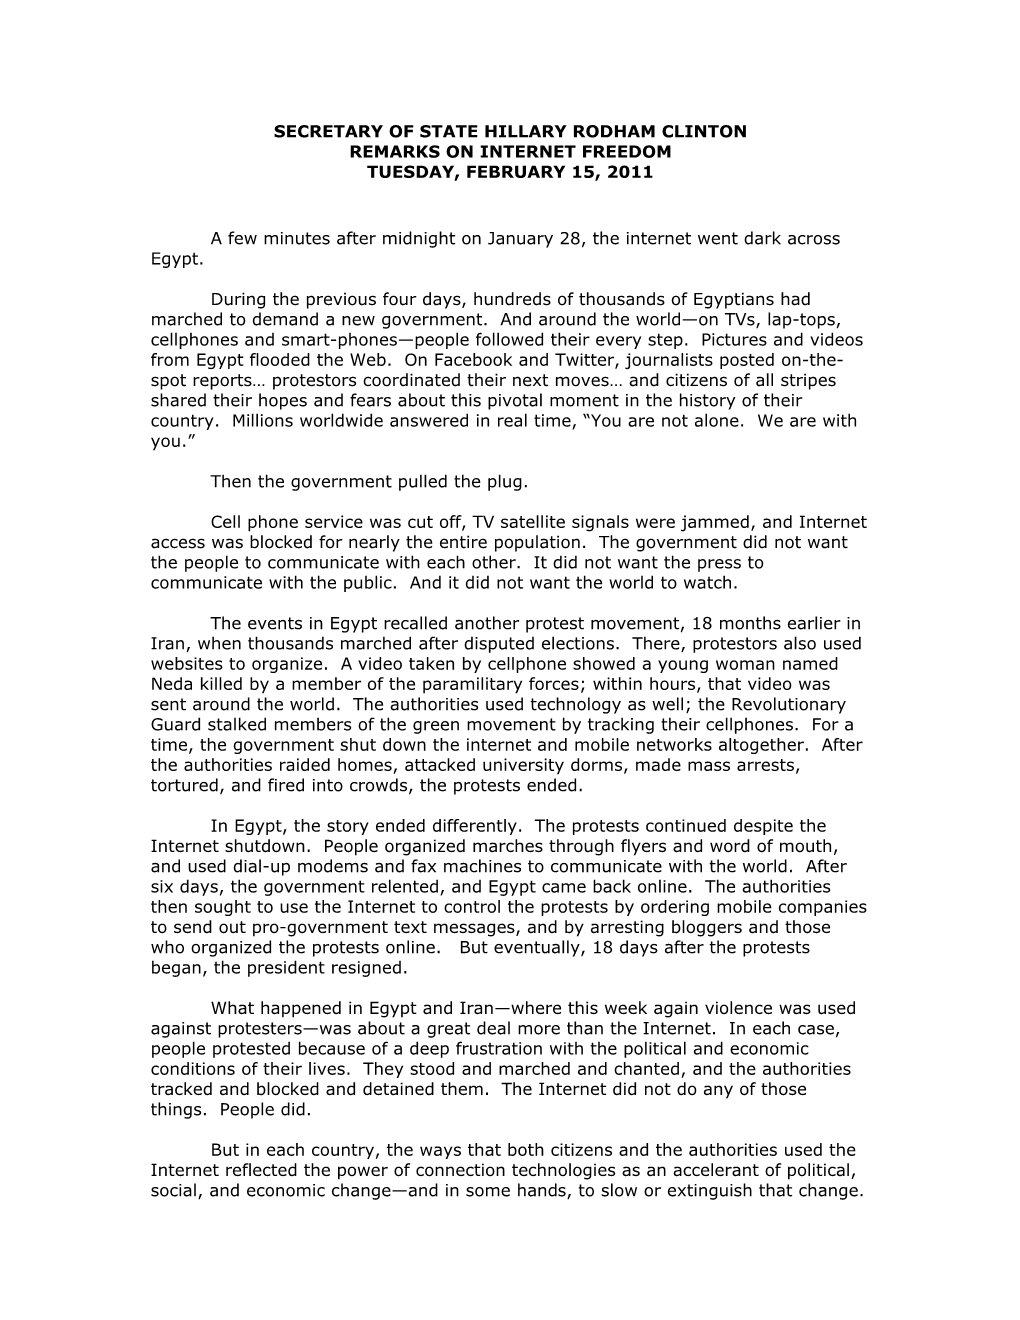 Secretary of State Hillary Rodham Clinton Remarks on Internet Freedom Tuesday, February 15, 2011